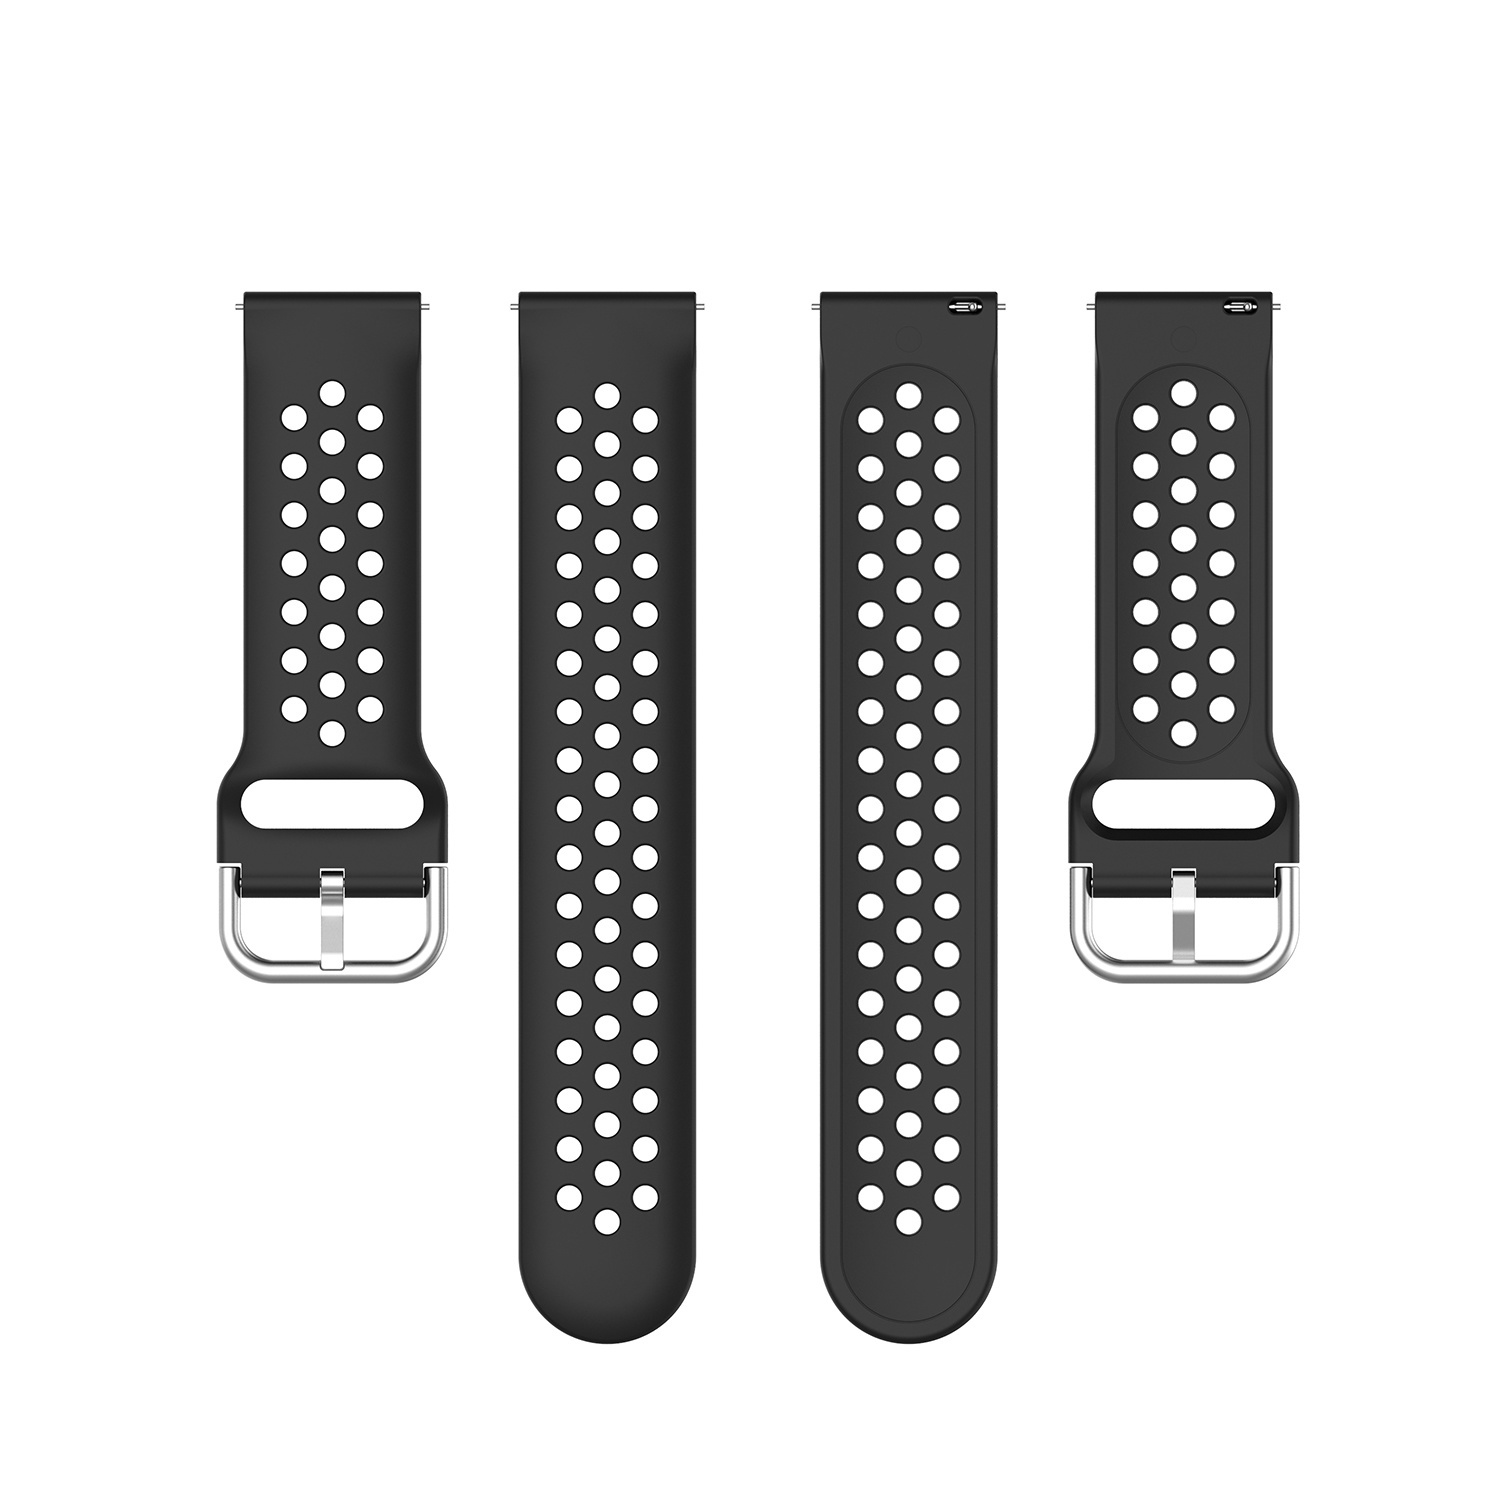 Huawei Watch GT sport dubbel gesp band - zwart